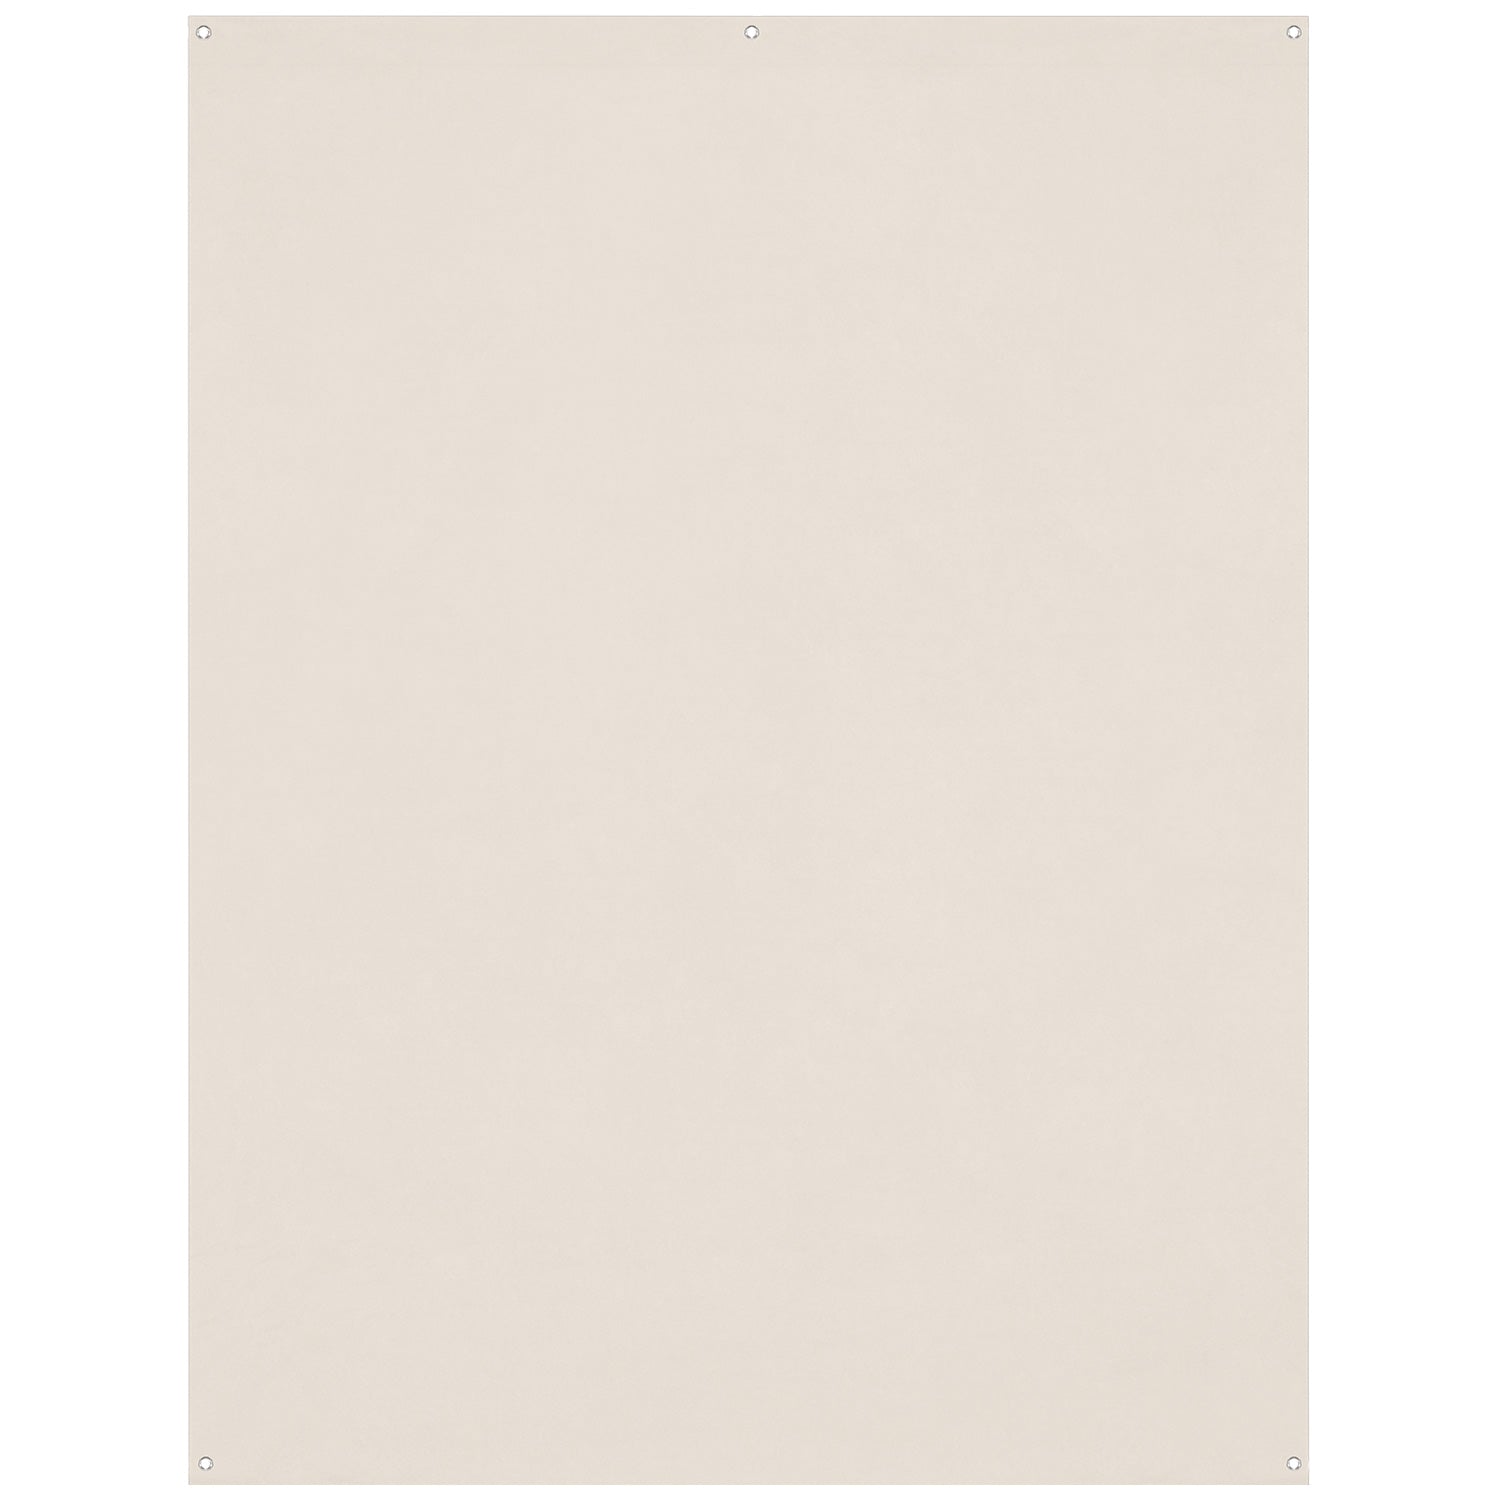 X-Drop Wrinkle-Resistant Backdrop - Buttermilk White (5' x 7')